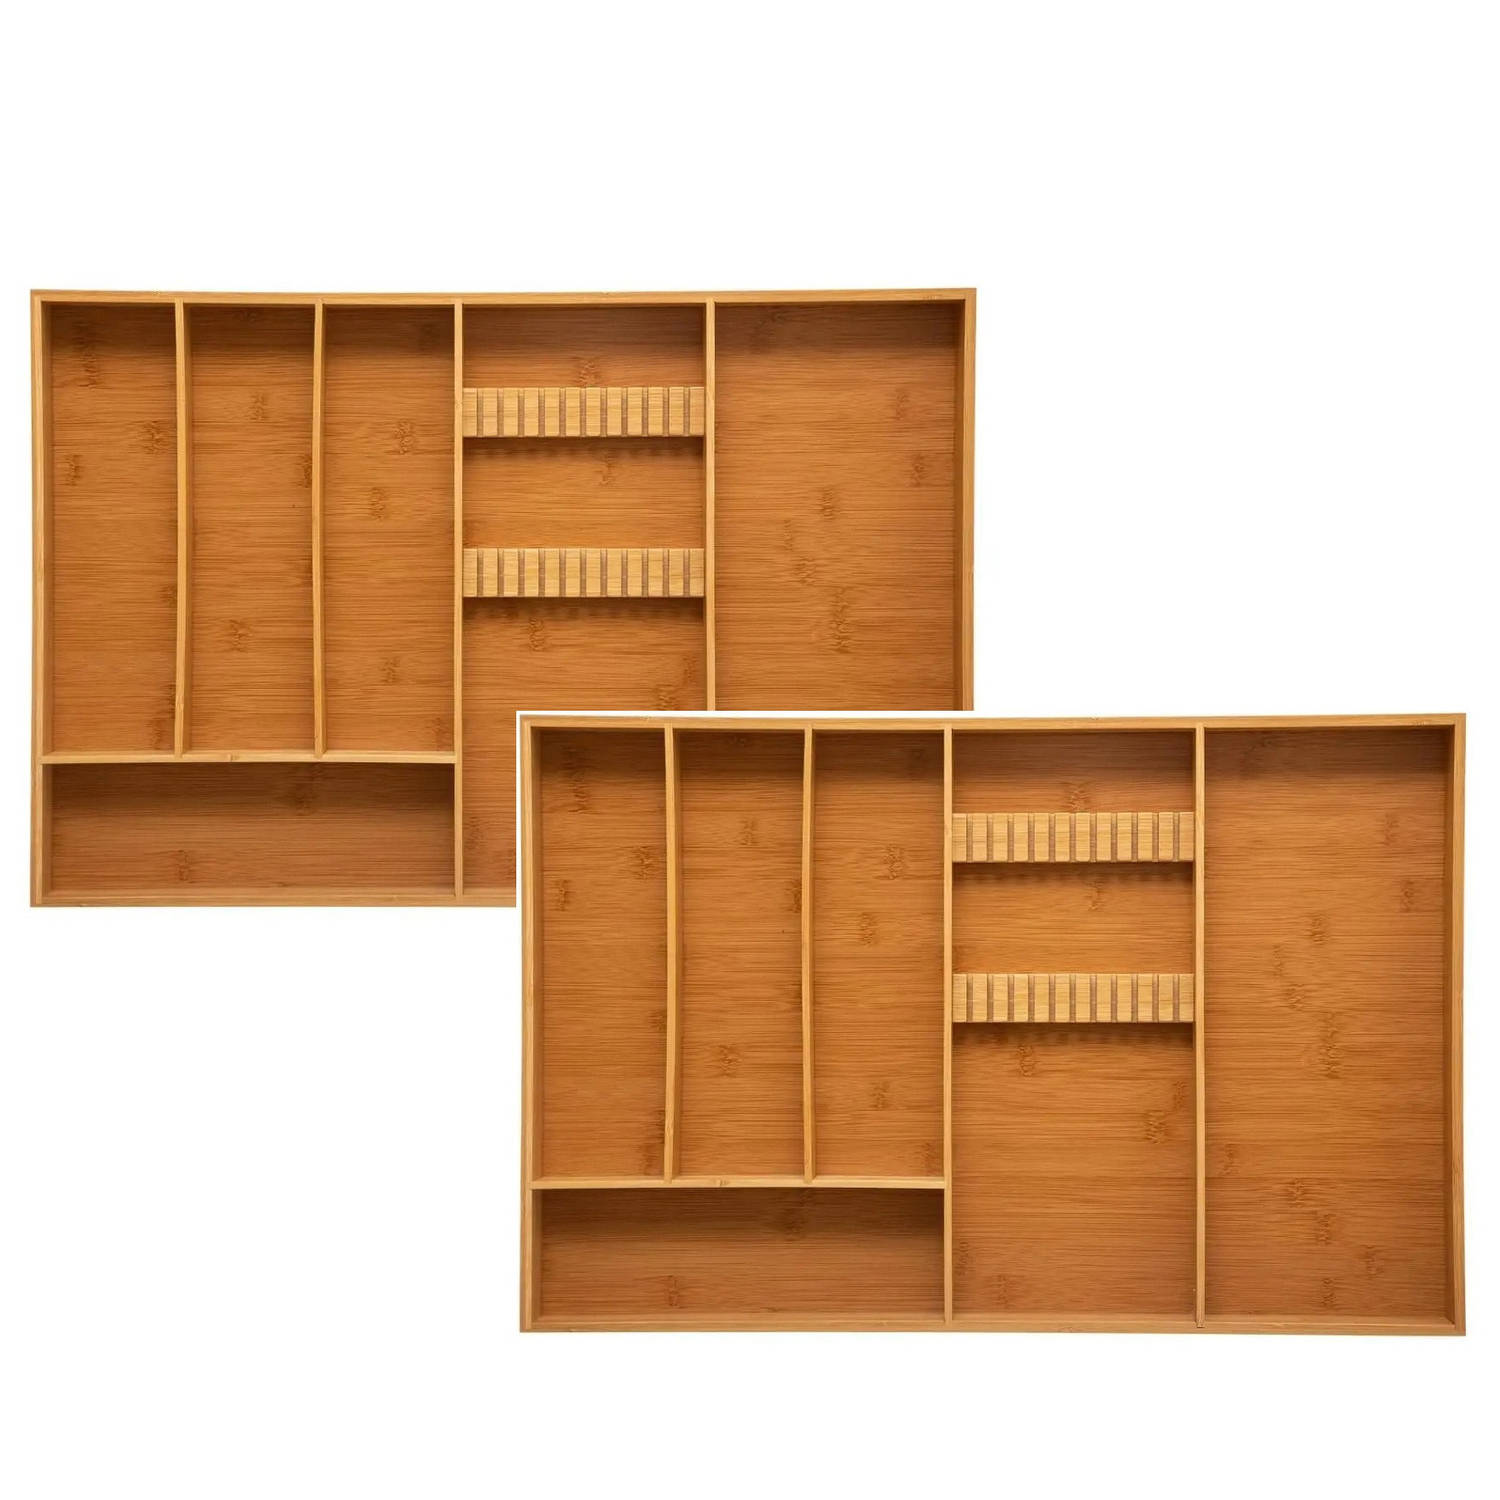 Set van 2x stuks bestekbakken/keuken organizers 6-vaks bamboe 38 x 58 cm - Bestekbakken